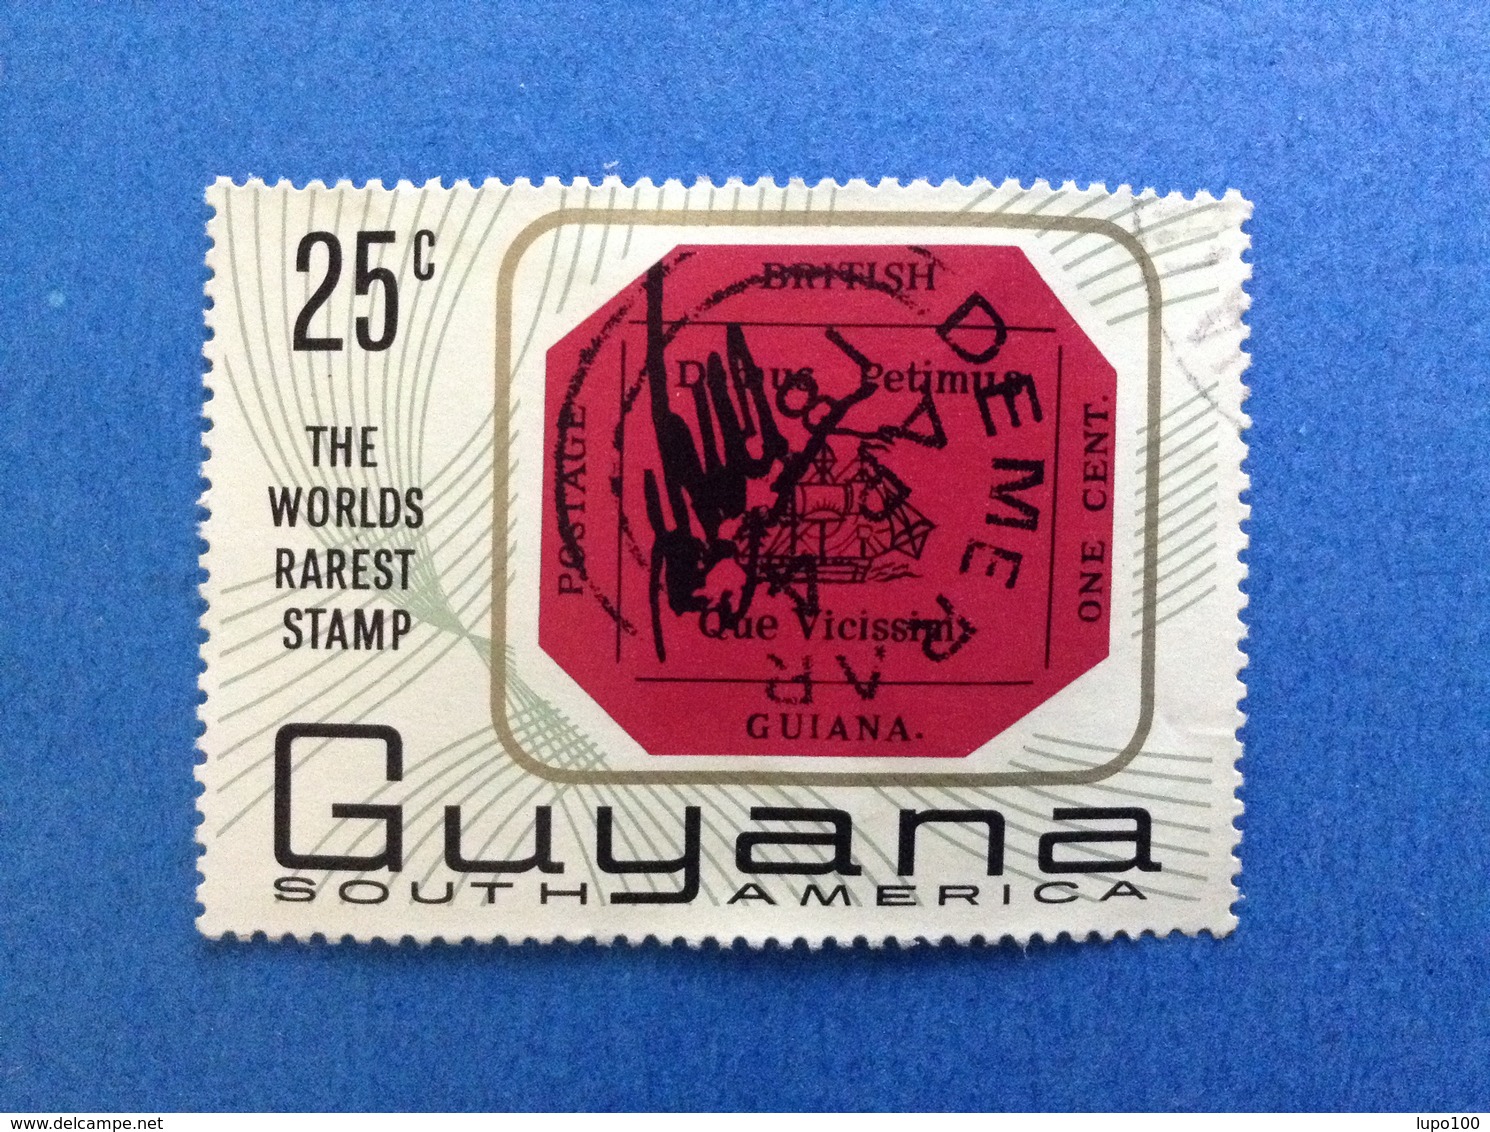 GUYANA GUIANA SOUTH AMERICA 25 C THE WORLDS RAREST STMP FRANCOBOLLO USATO STAMP USED - Guyana (1966-...)